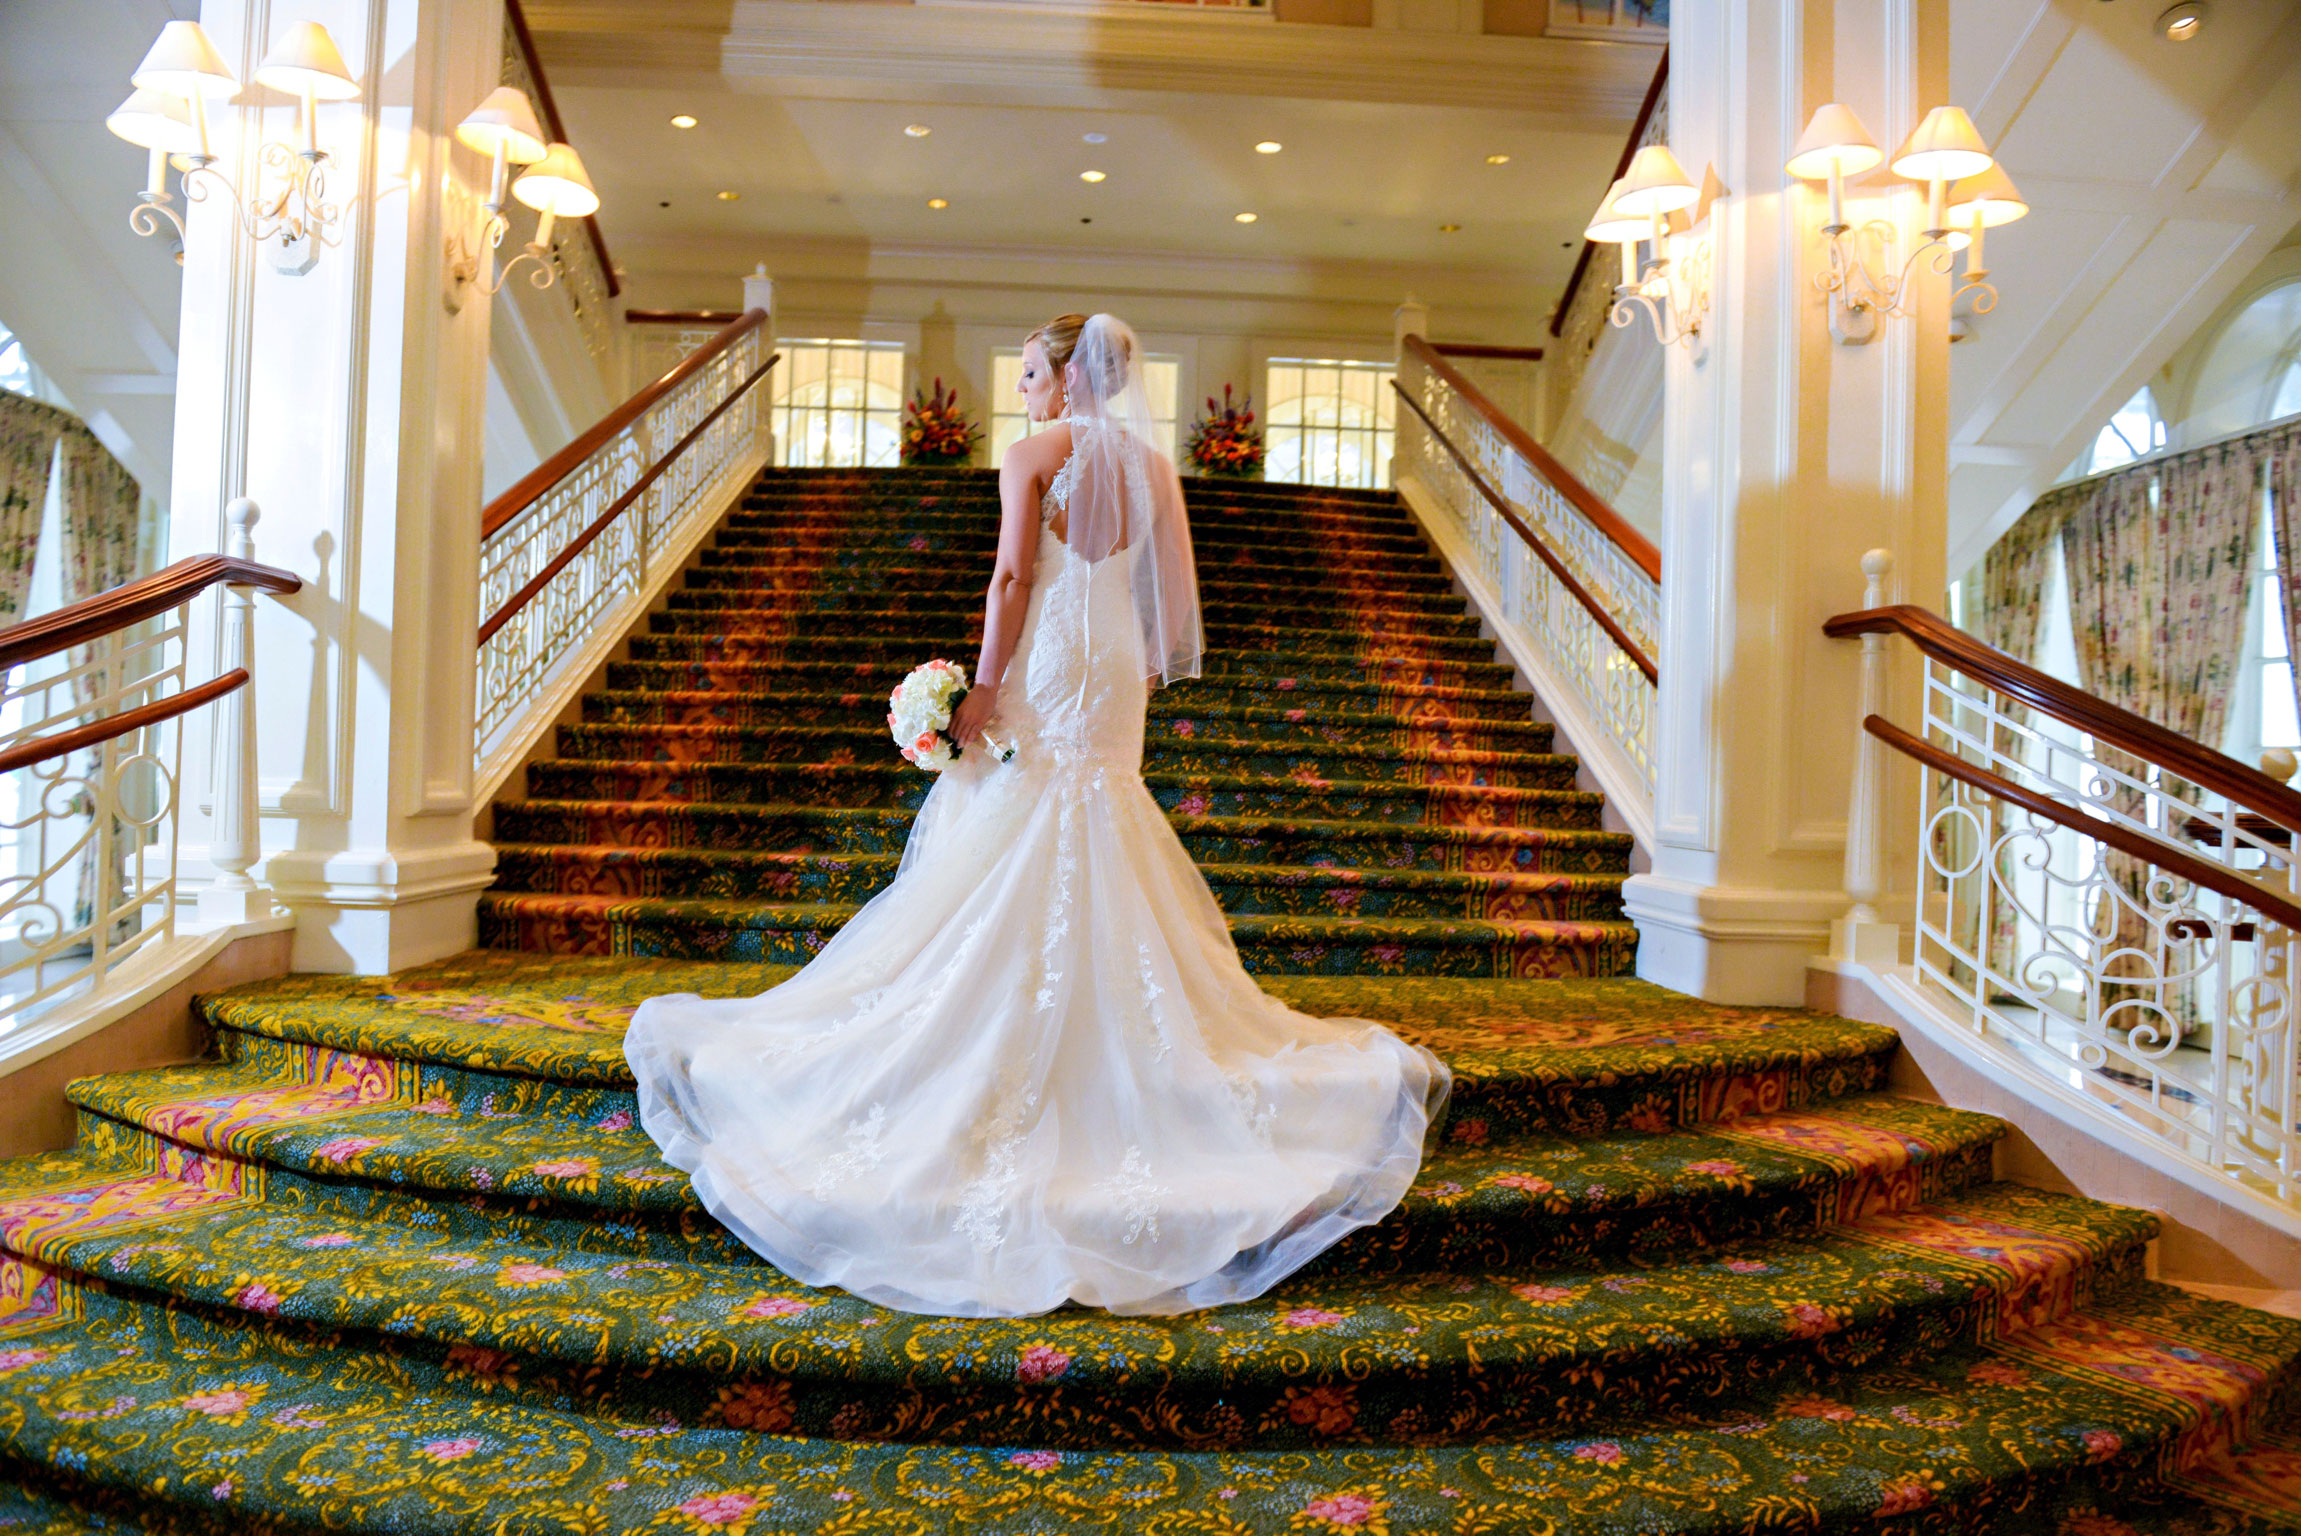 Jordann in wedding dress on Disney's Grand Floridian Grand Staircase.jpg